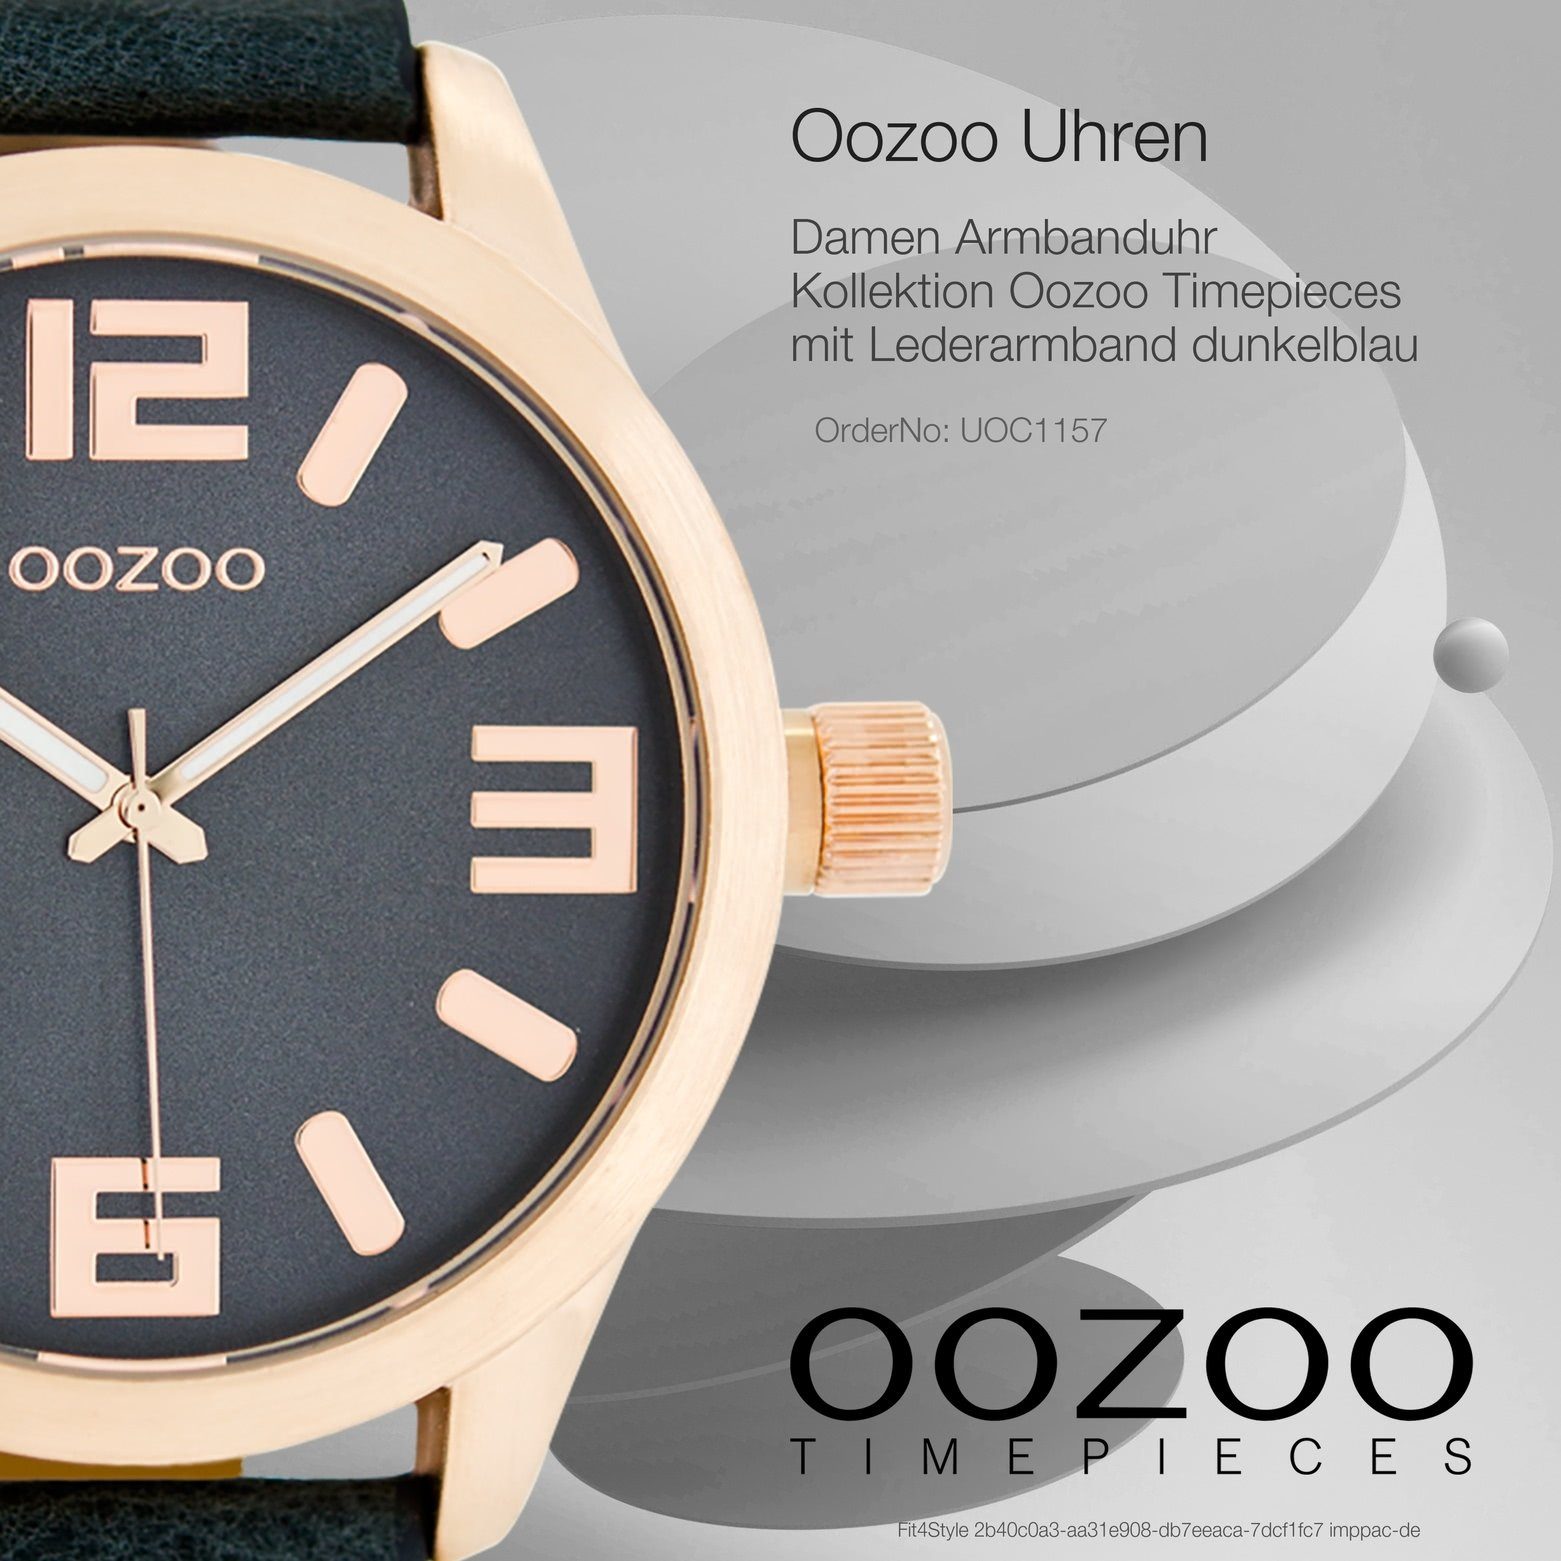 Damen Uhren OOZOO Quarzuhr UOC1157 Oozoo Damen Armbanduhr dunkelblau, Damenuhr rund, extra groß (ca. 46mm), Lederarmband, Fashio